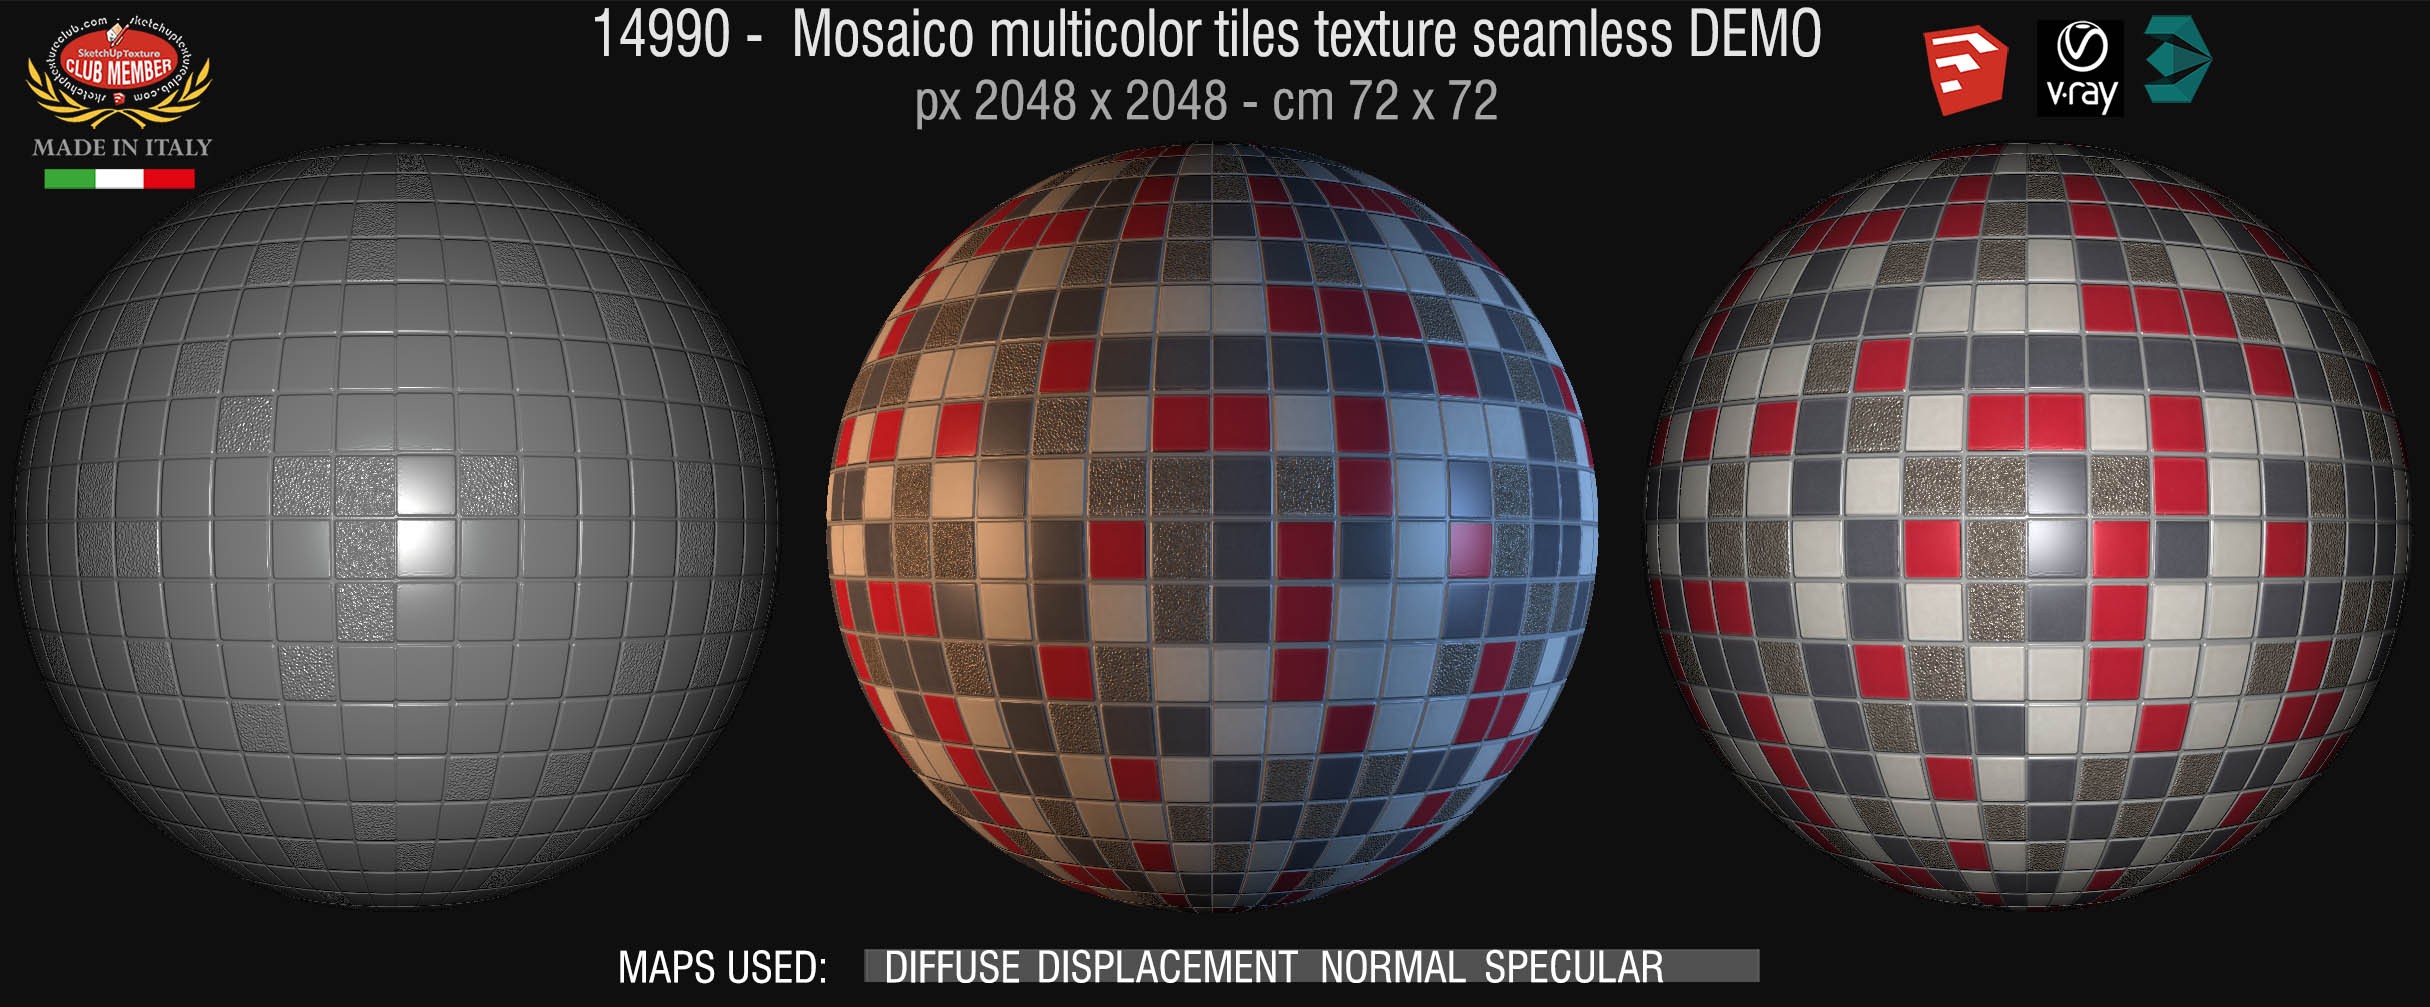 14990 Mosaico multicolor tiles texture seamless + maps DEMO